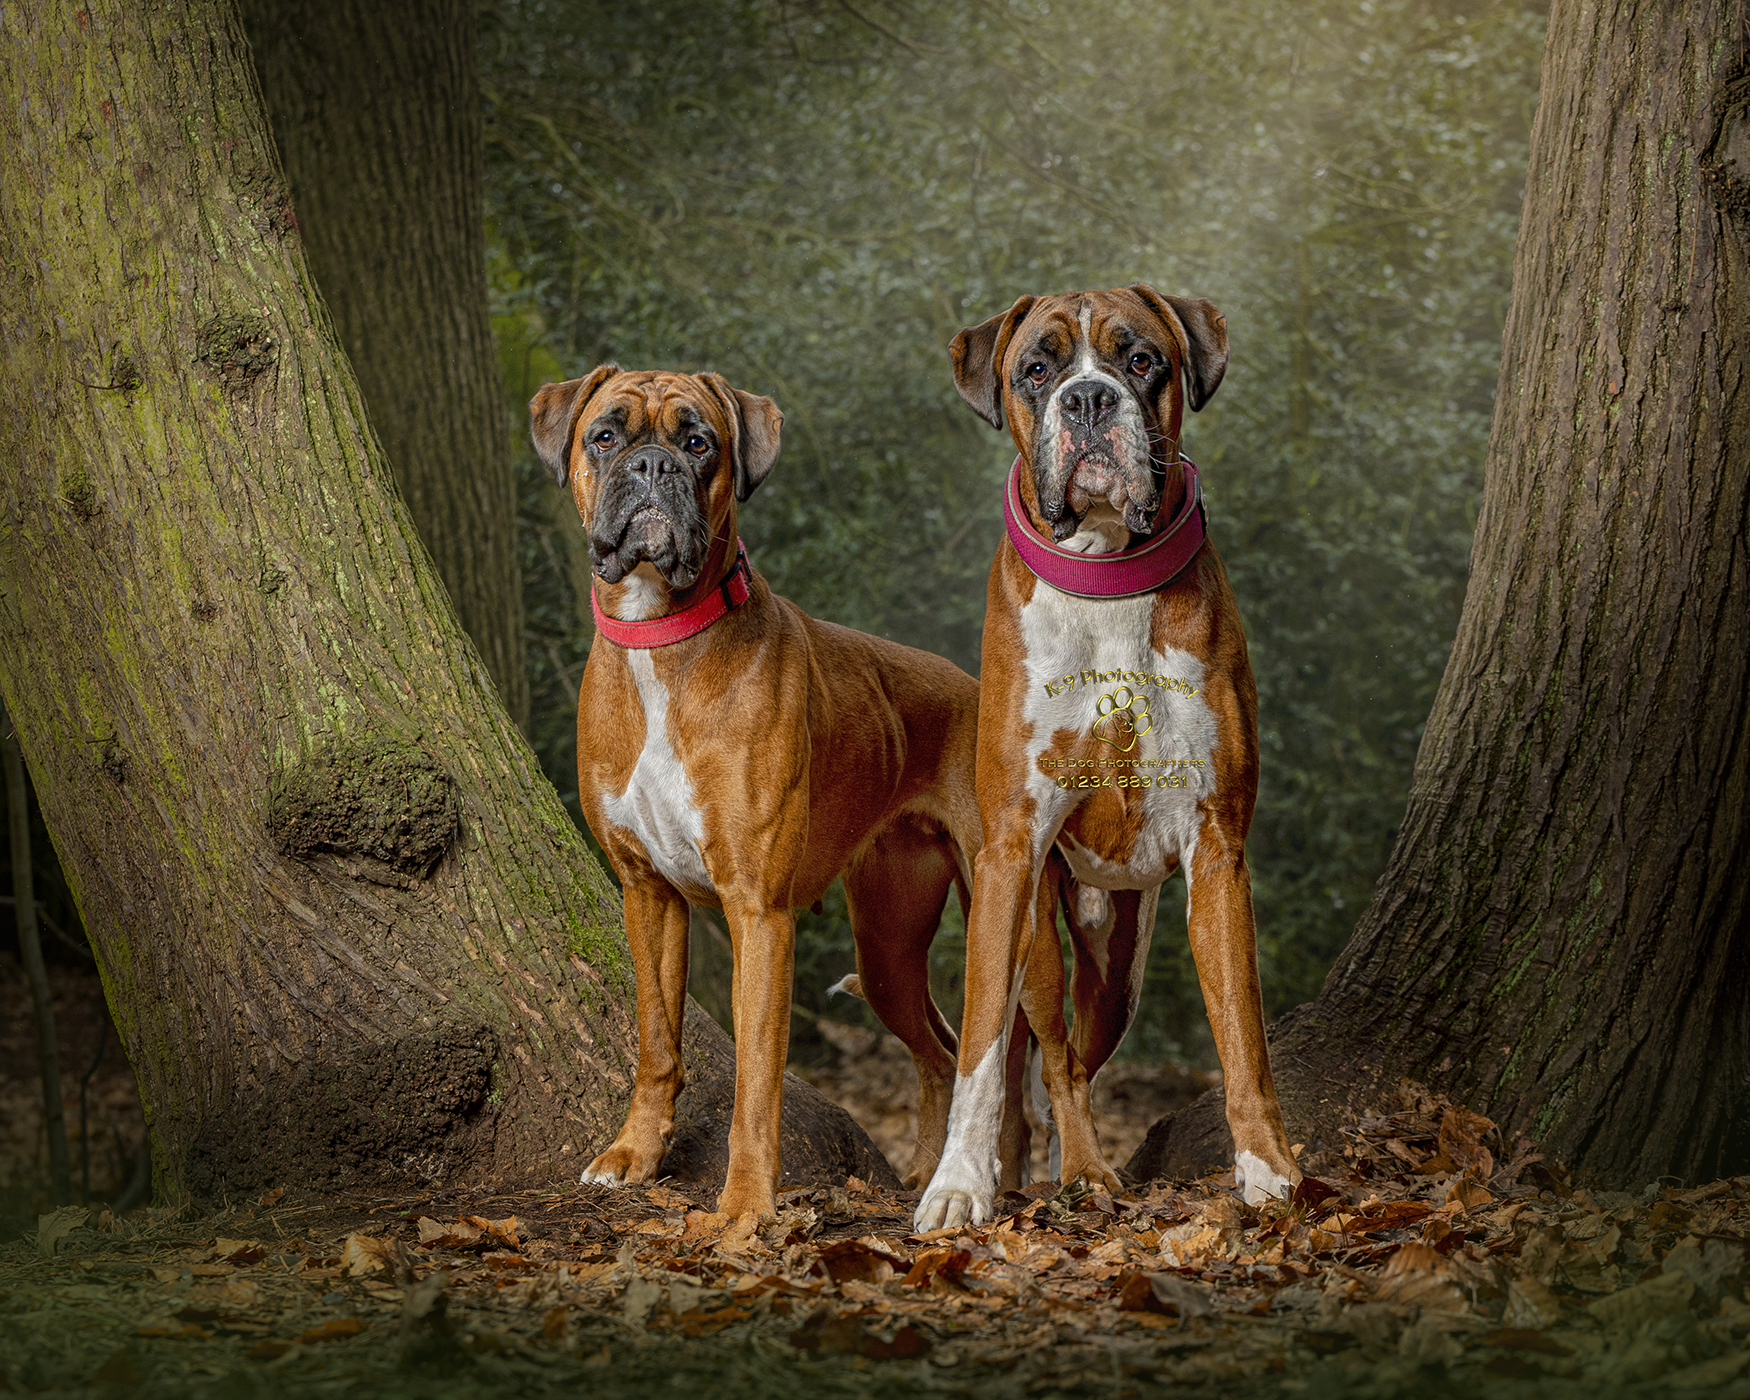 Award winning location Dog Photography from UK Pet photographer Adrian Bullers